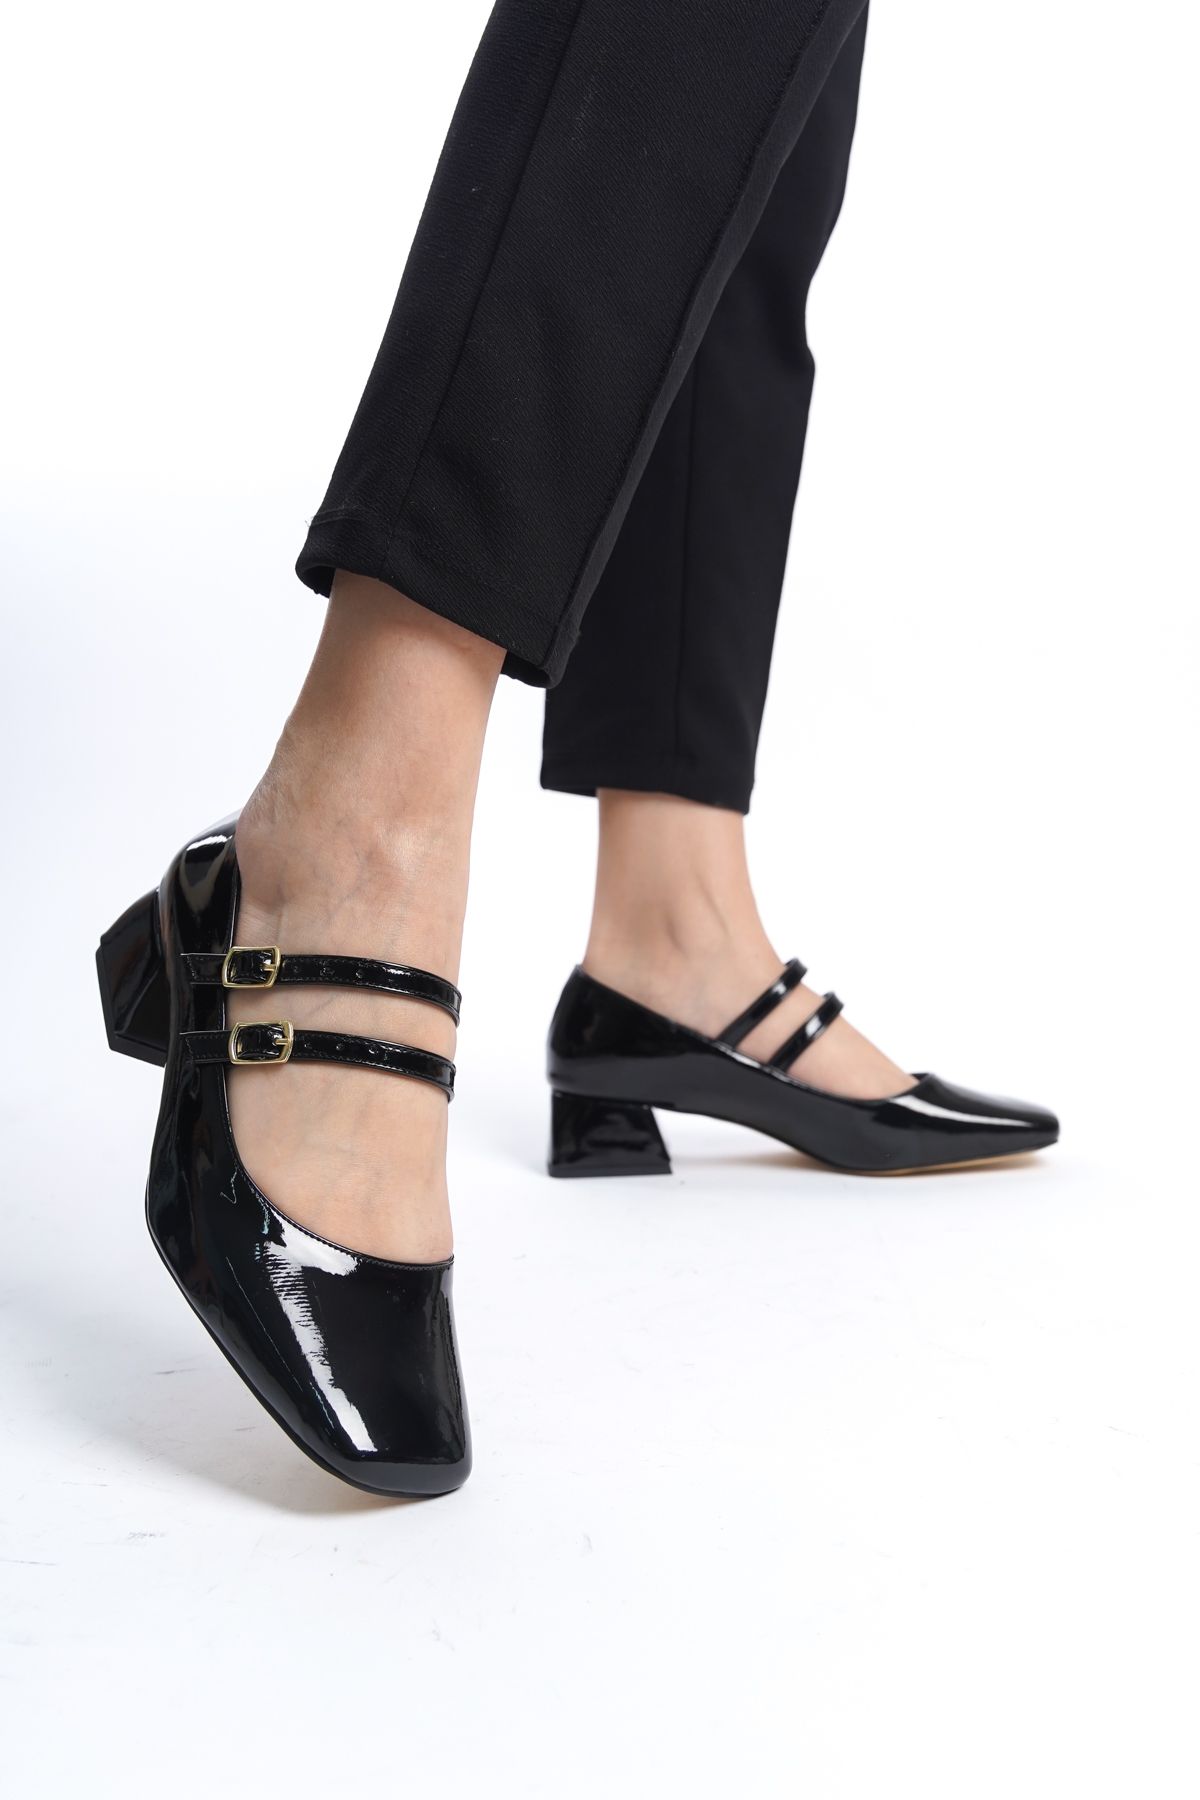 Şenpa Siyah Rugan Alçak Topuklu Kadın Ayakkabı